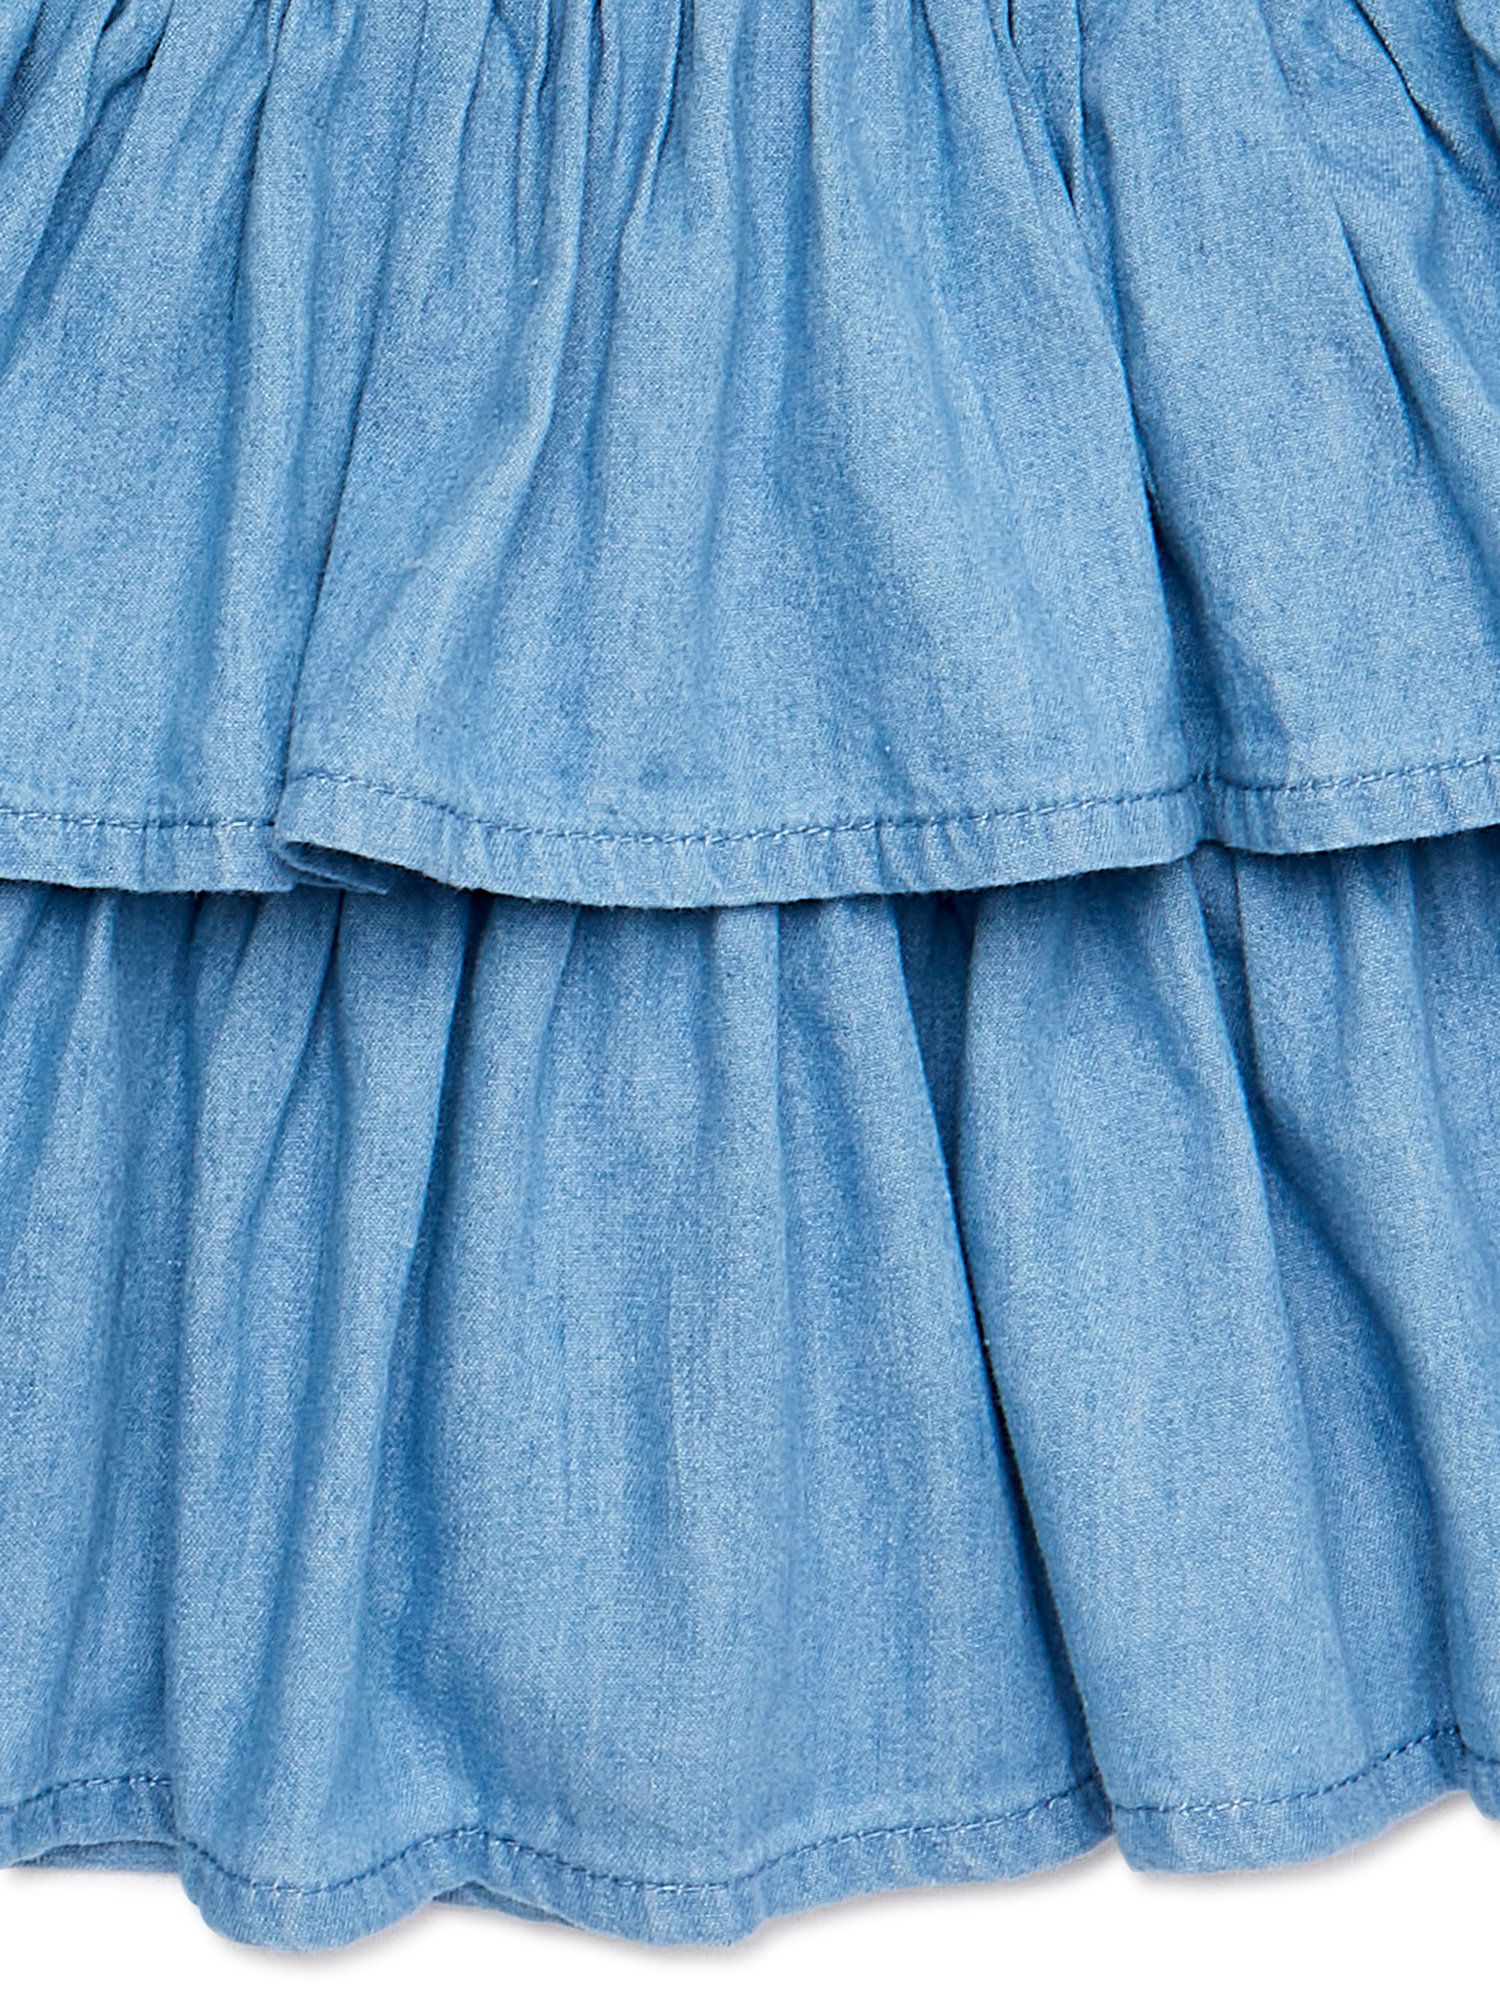 Garanimals Baby and Toddler Girls Tiered Skirt, Sizes 12M-5T - image 3 of 3